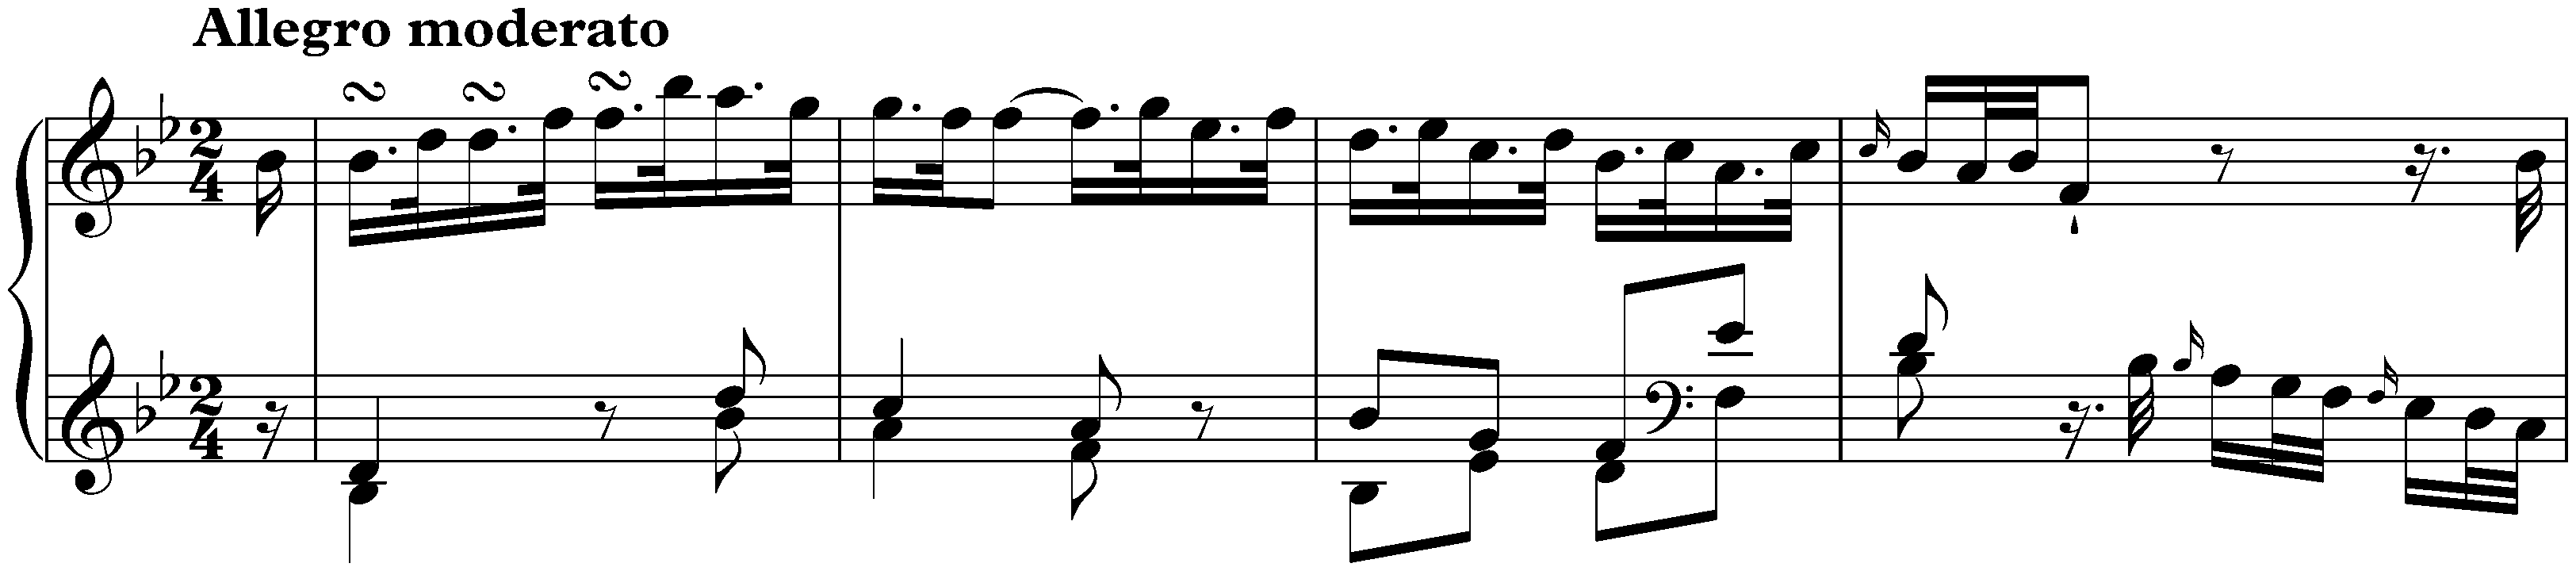 Sonata in B-flat major, Hob. XVI:18; 1. Allegro moderato